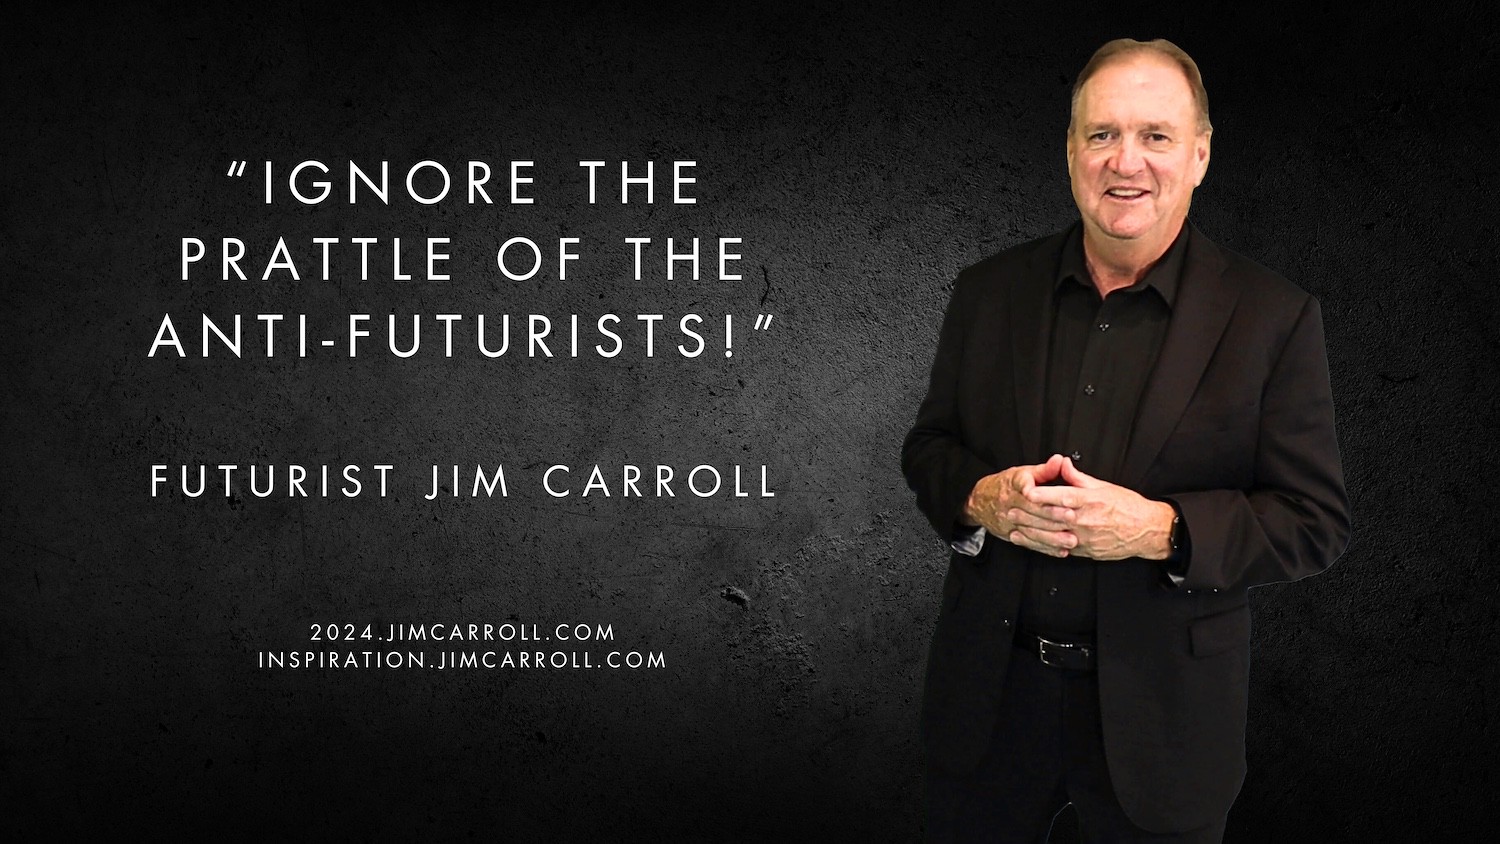 Daily Inspiration: "Ignore the prattle of the anti-futurists!" - Futurist Jim Carroll